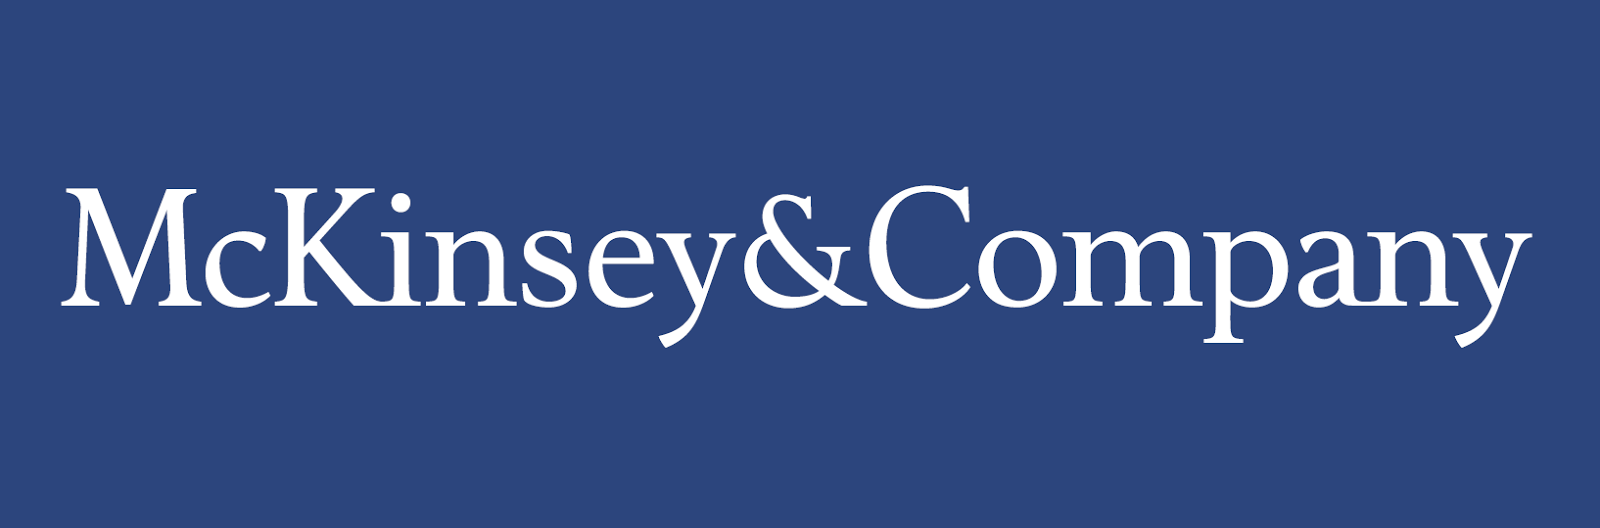 File:McKinsey Quarterly logo.png - Wikimedia Commons